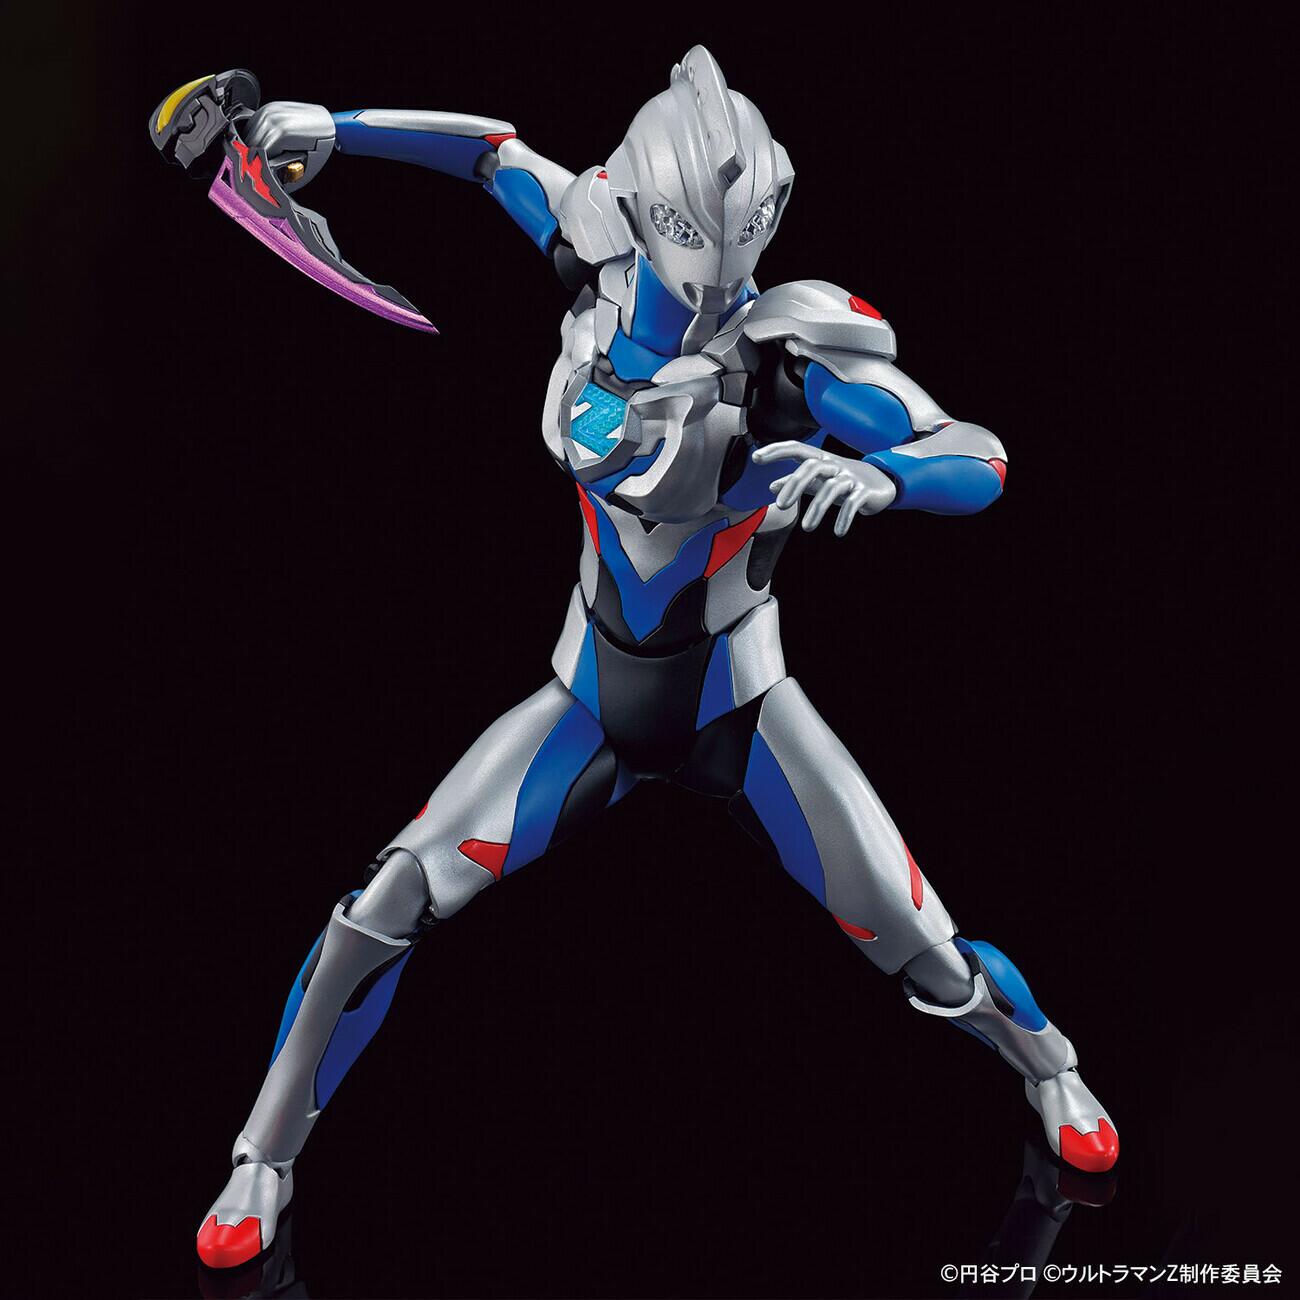 100+] Ultraman Png Images | Wallpapers.com